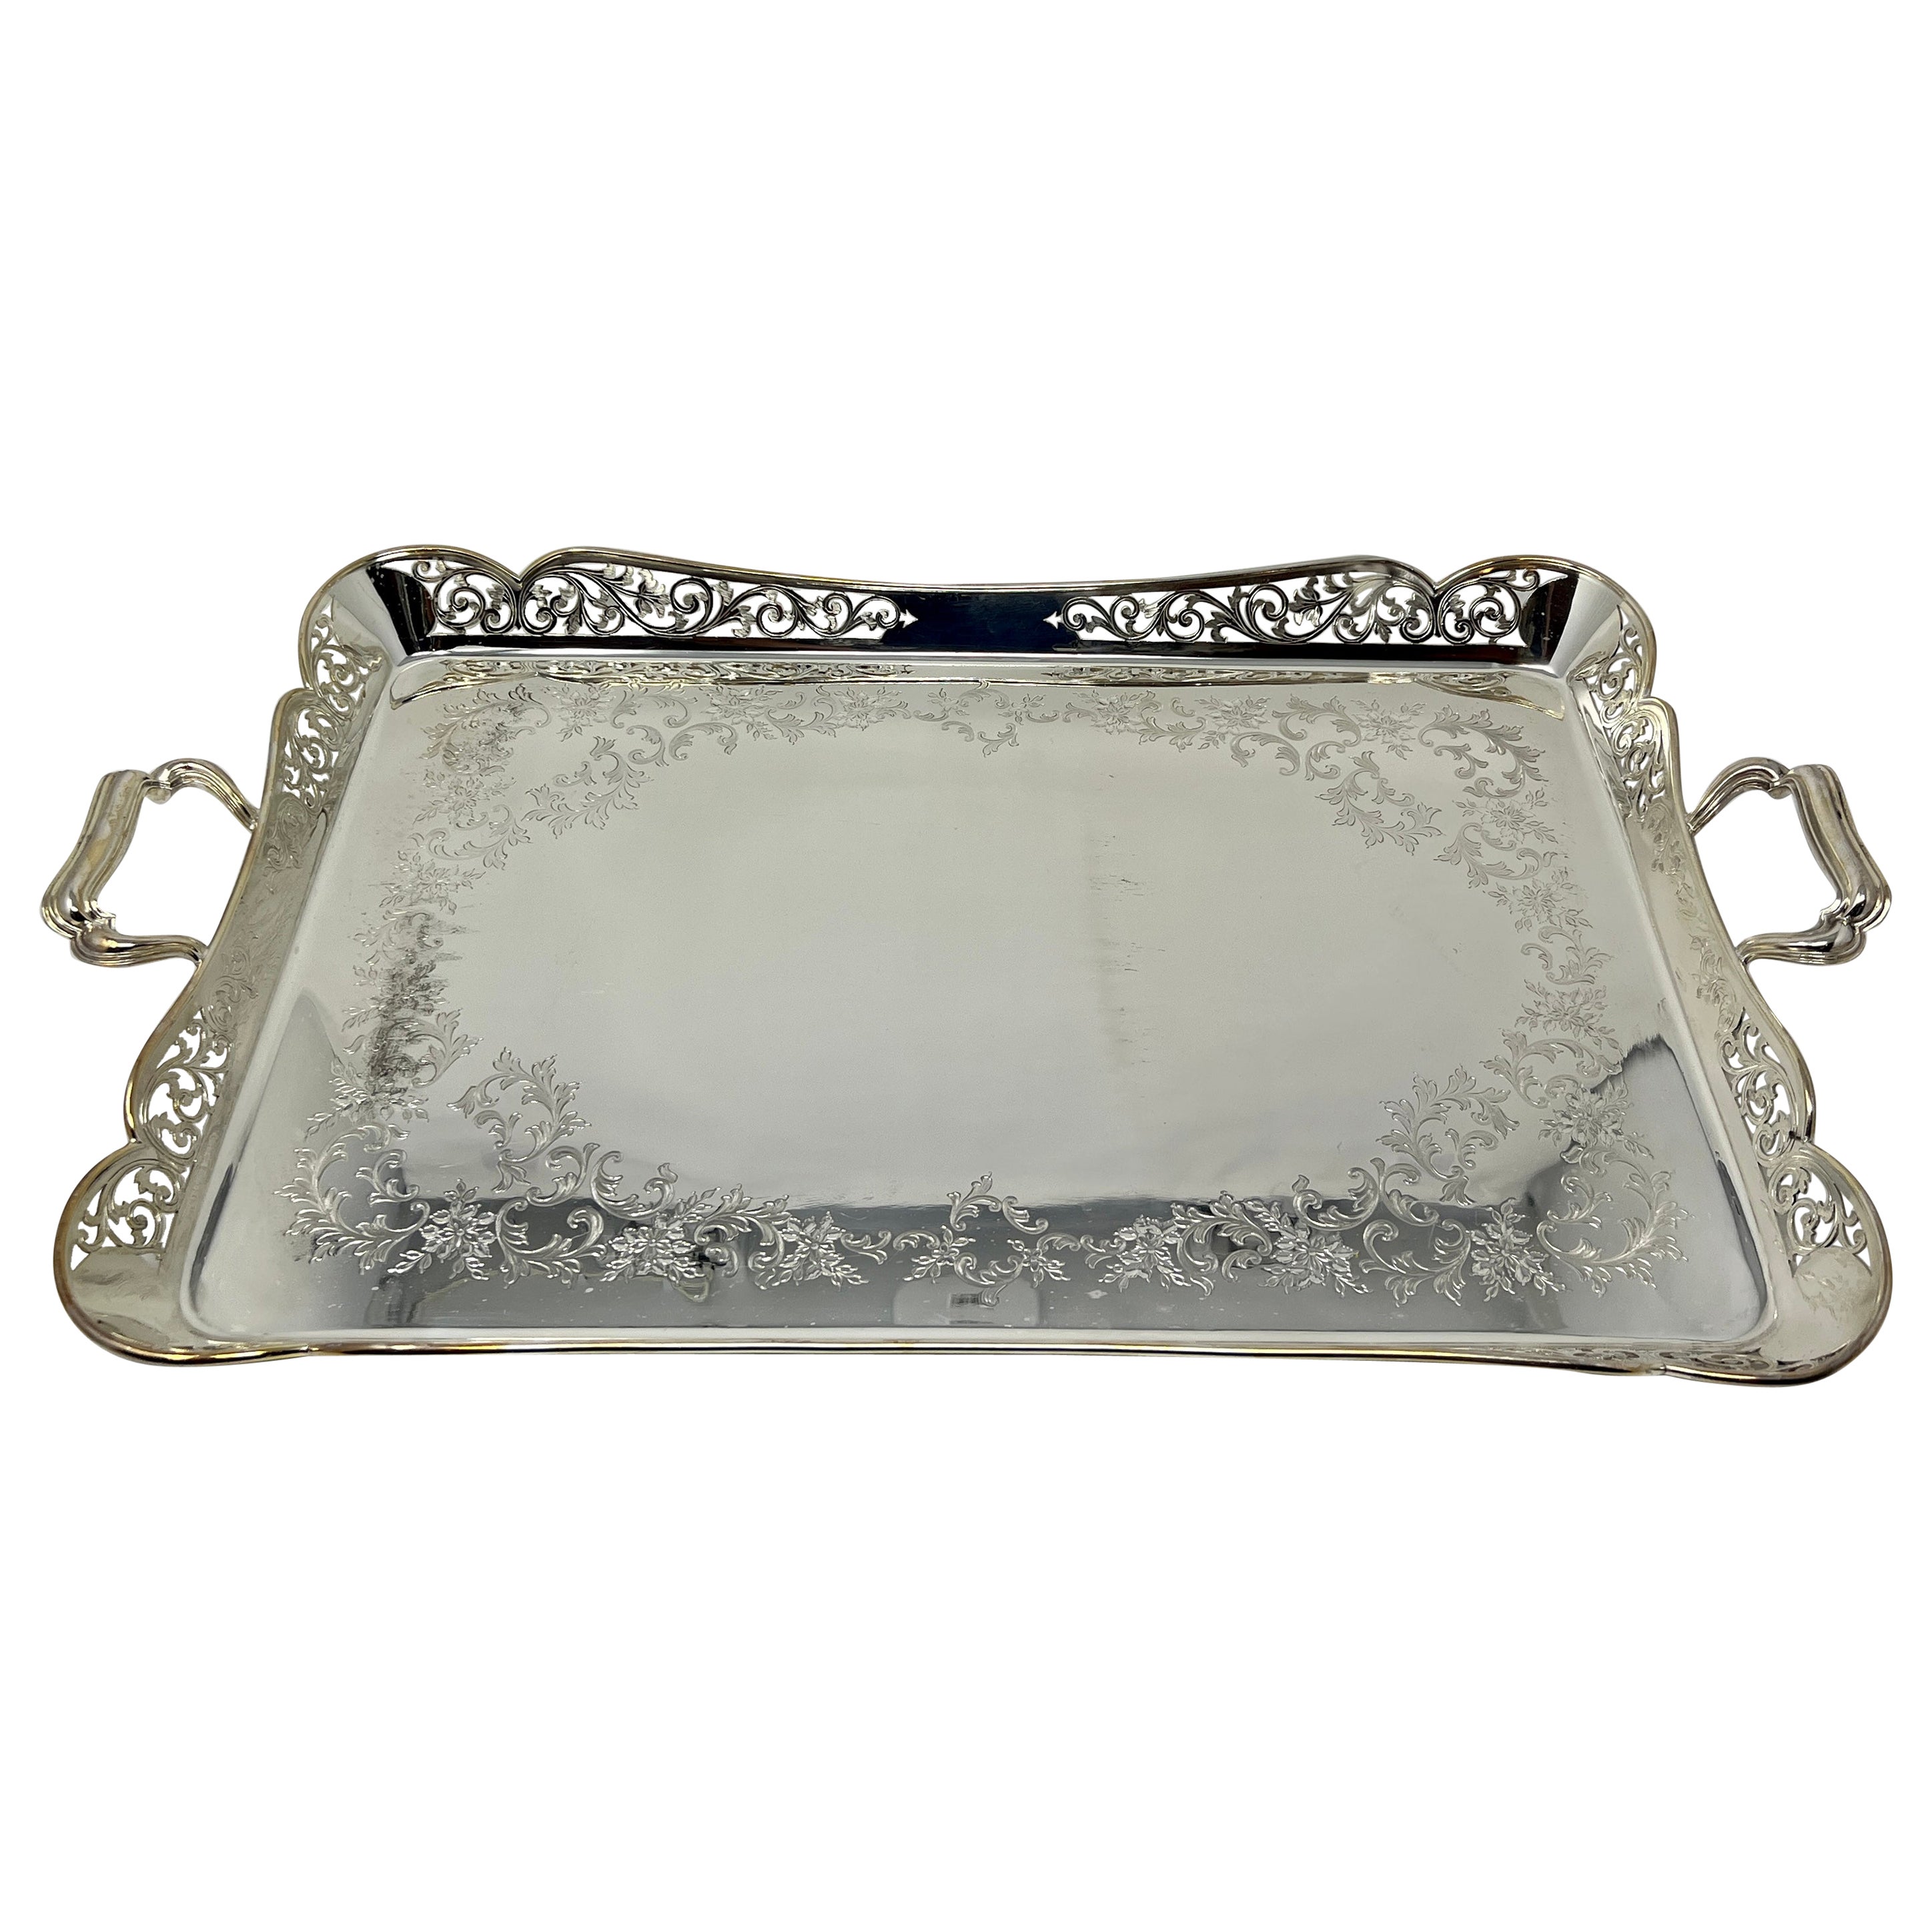 Antique English Silver Plate Galleried Tray, Circa 1890.